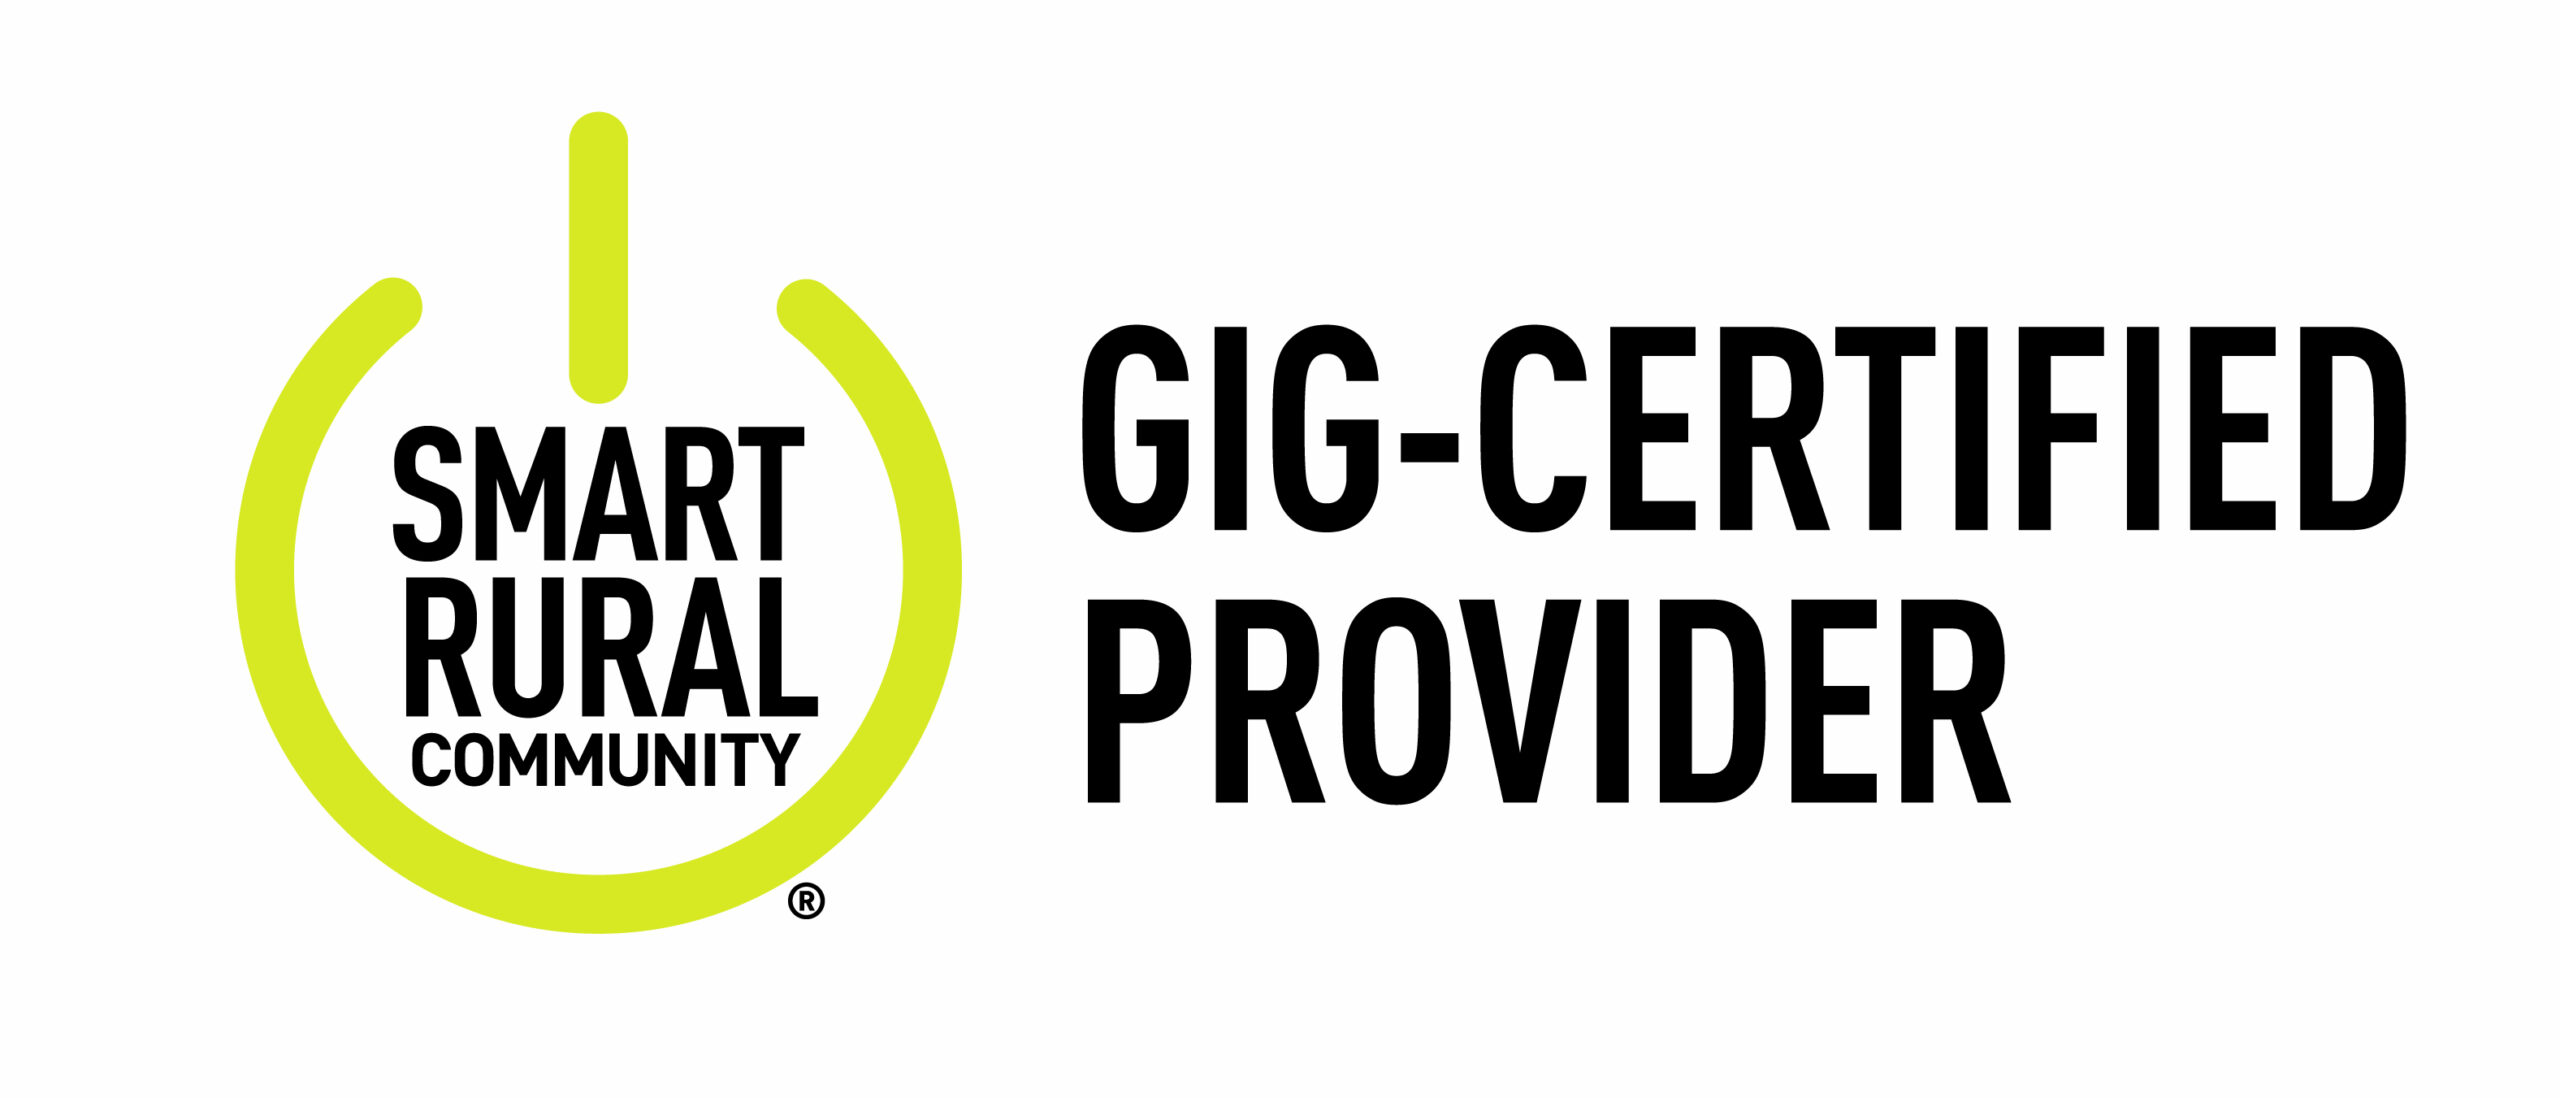 gig certified provider